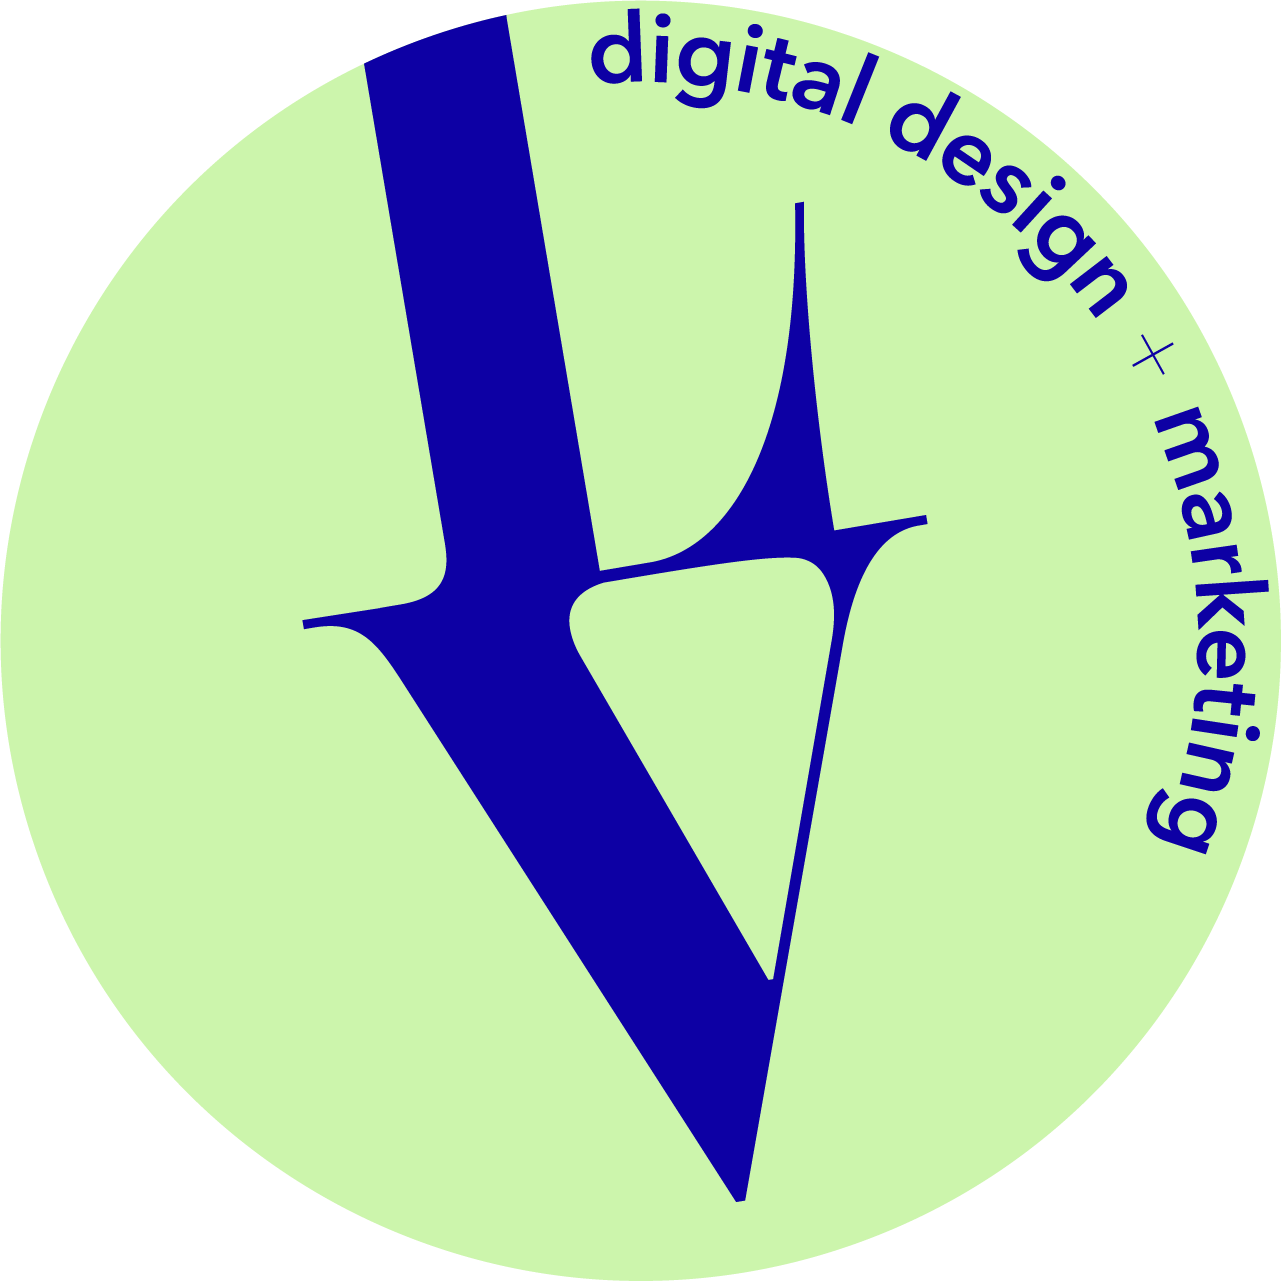 Digital design & Marketing